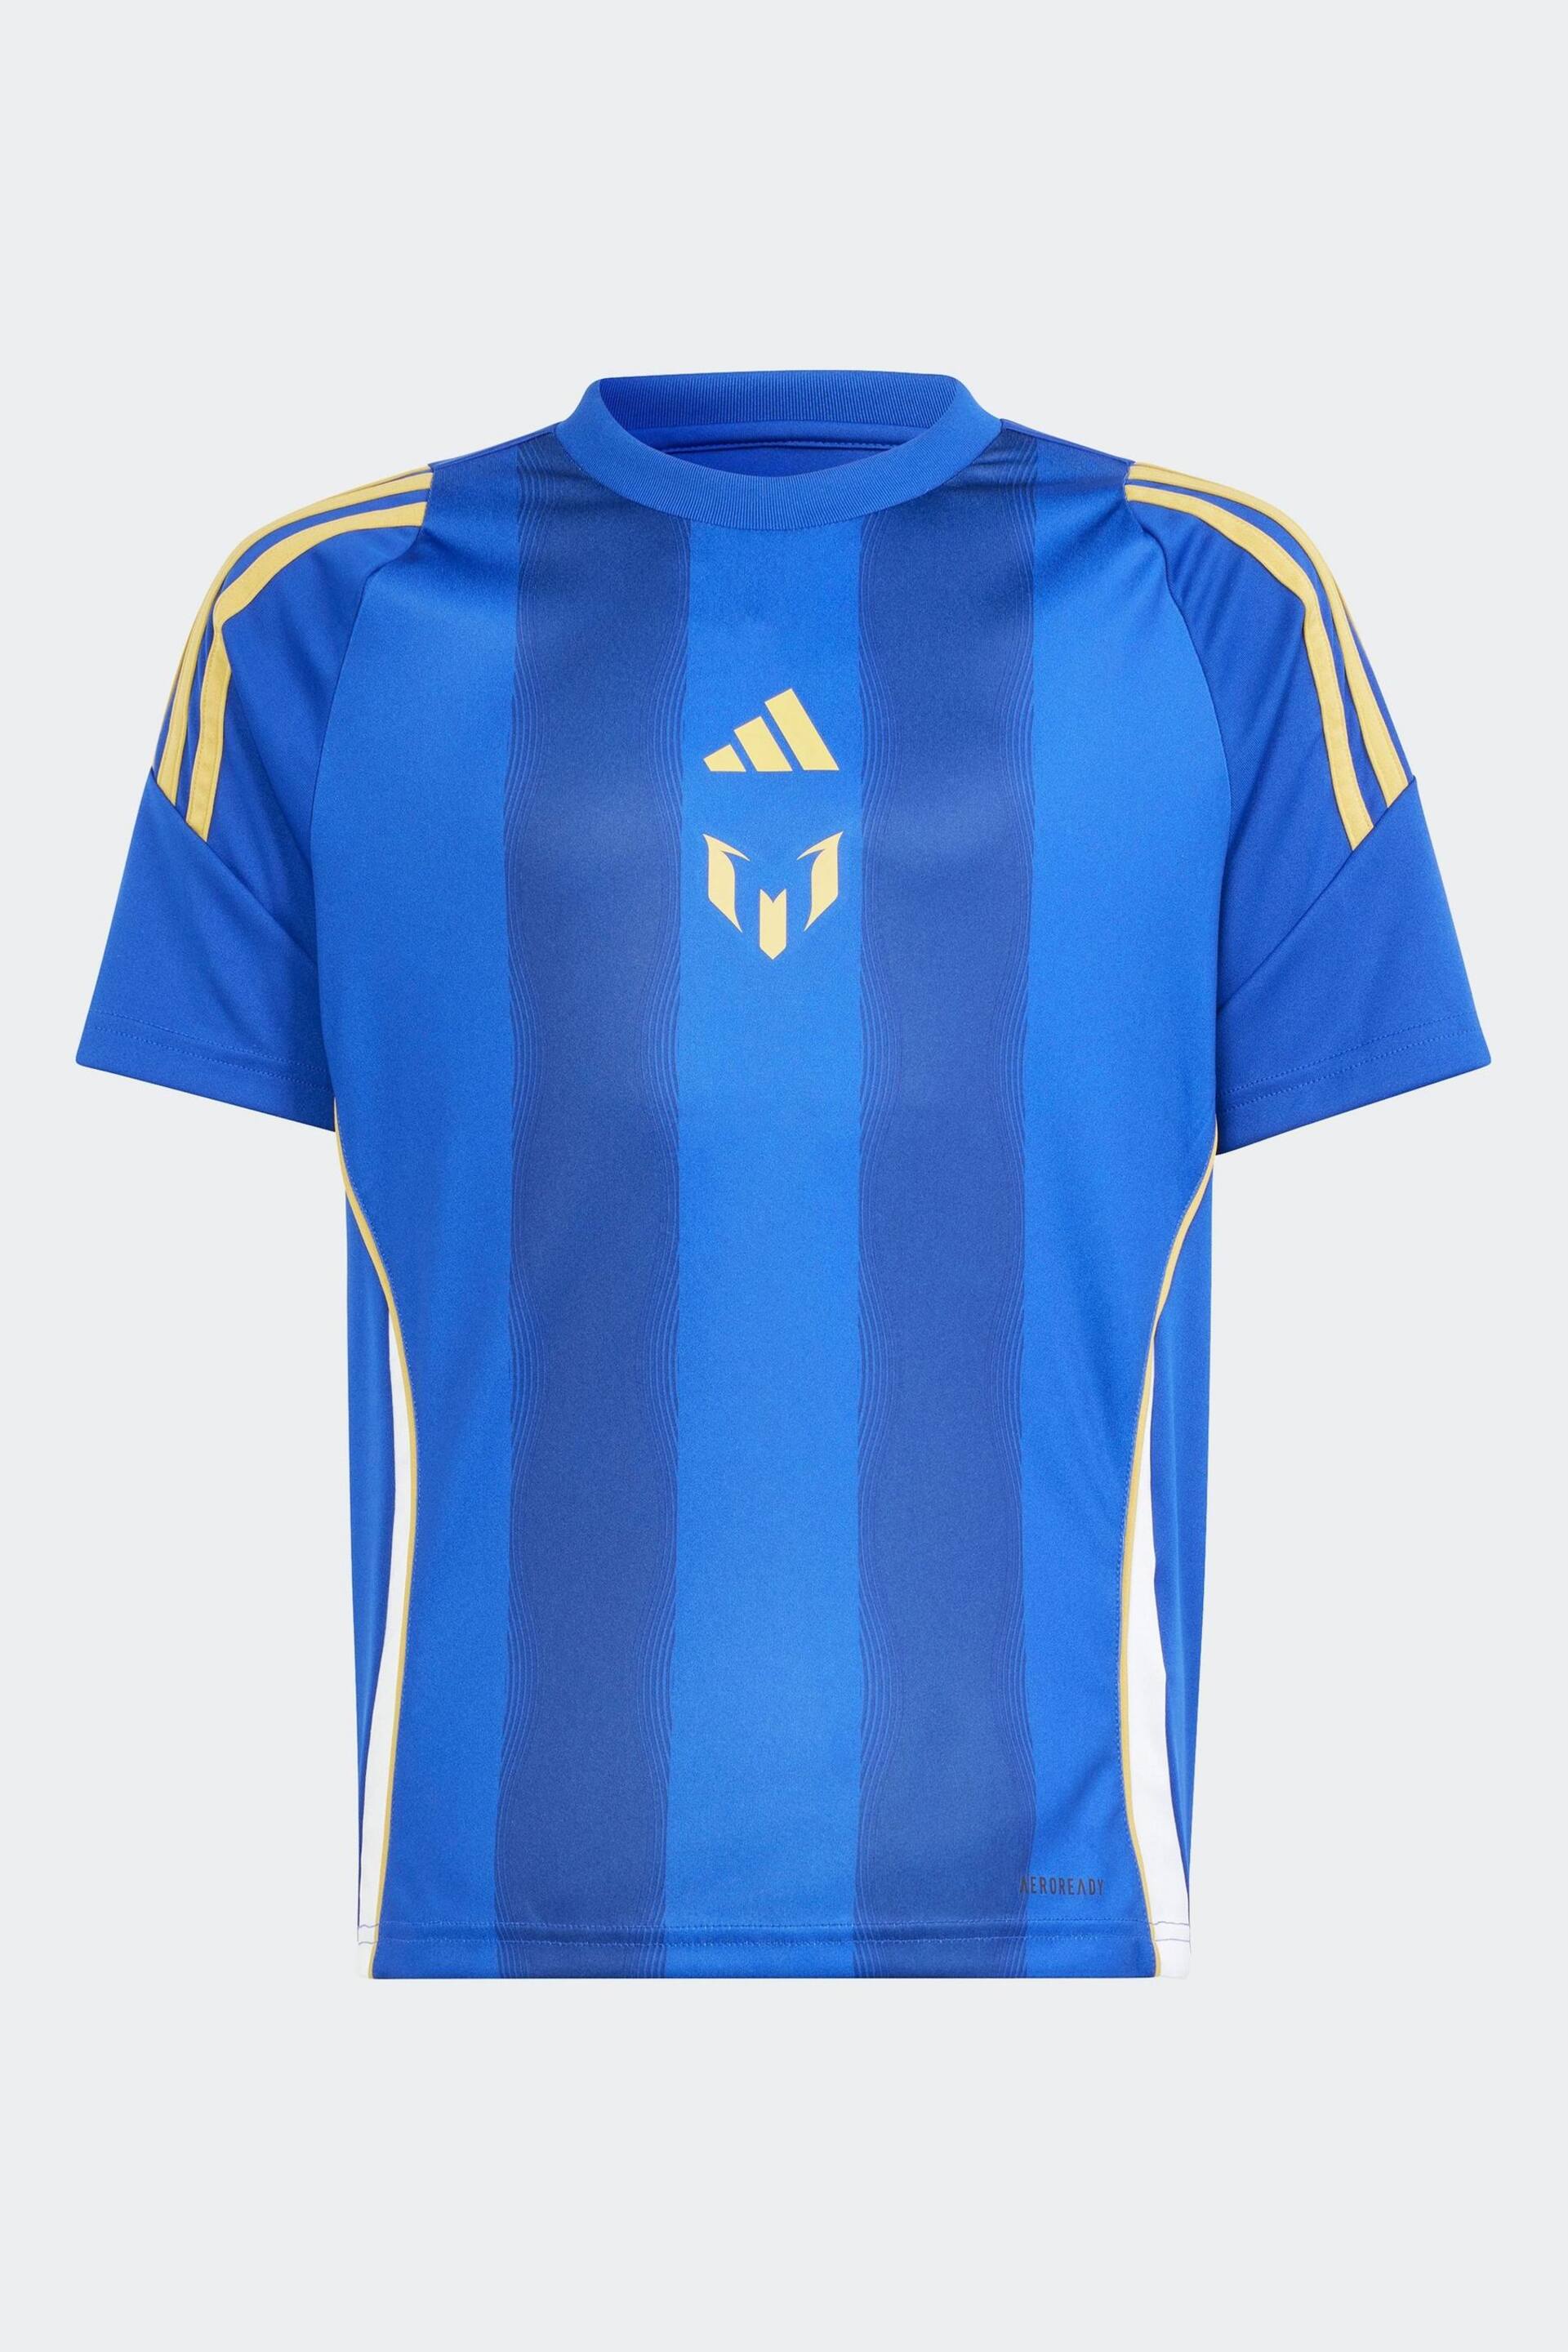 adidas Blue/White Pitch 2 Street Messi Training Jersey T-Shirt - Image 1 of 5